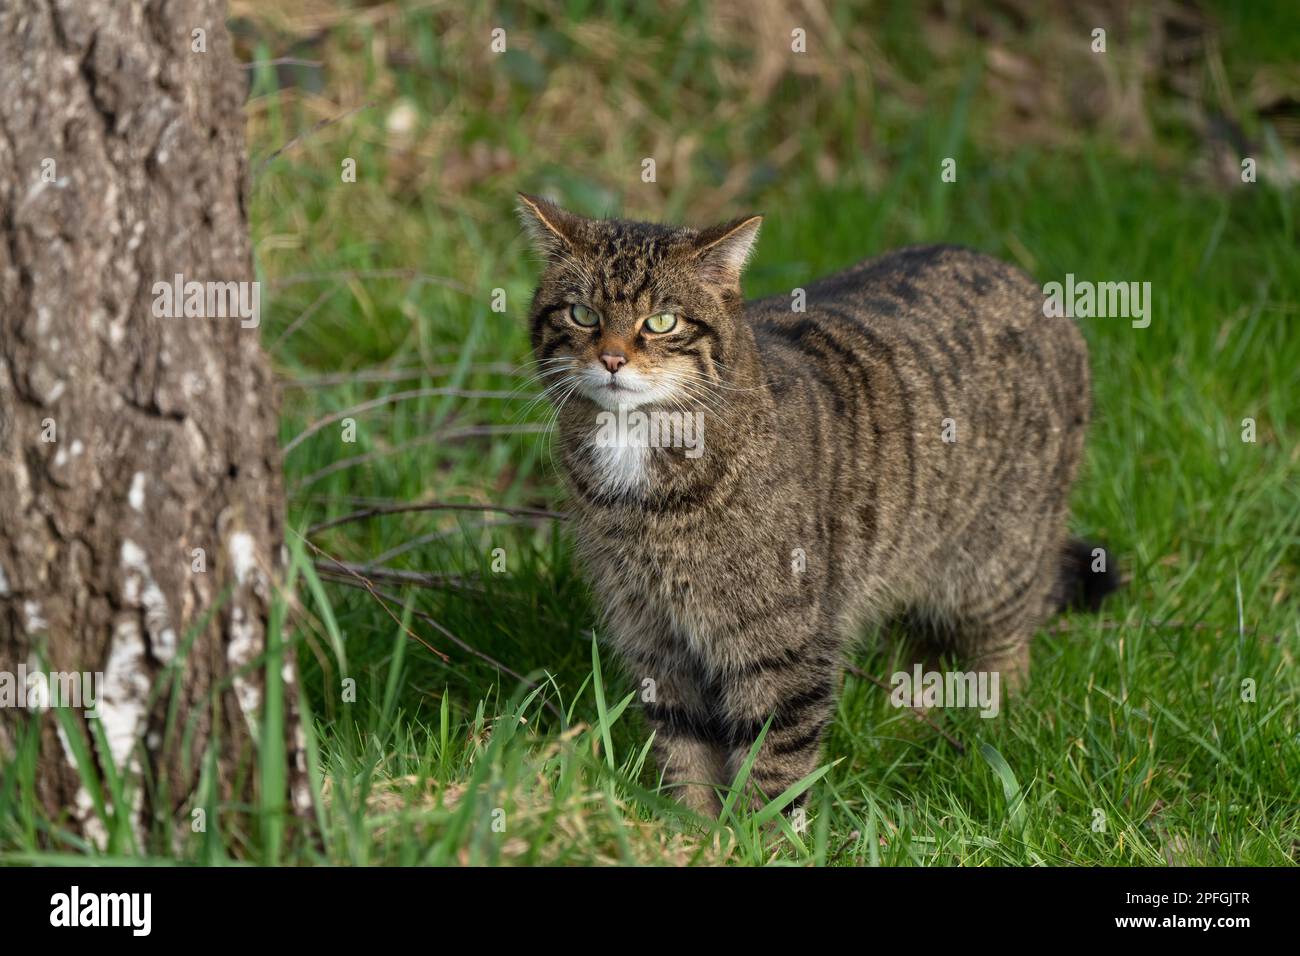 Scottish wildcat-Felis silvestris silvestris. Stock Photo